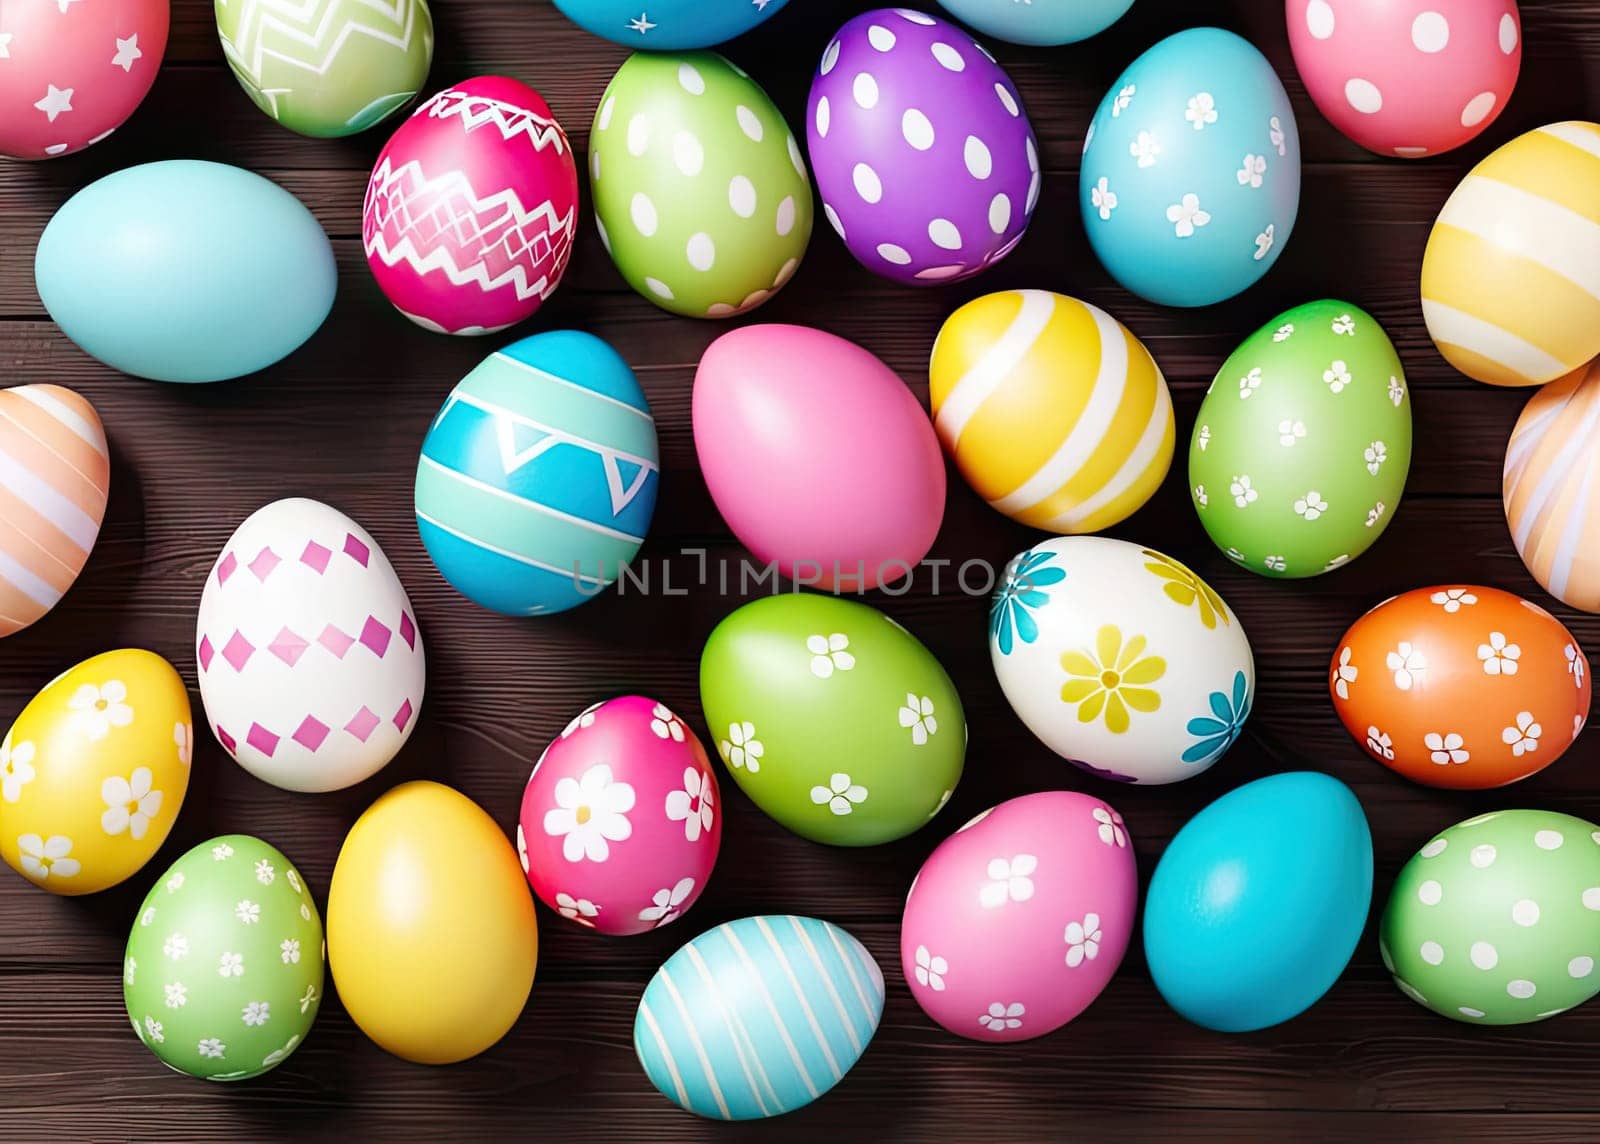 Colorful Easter eggs on wooden background. easter celebration